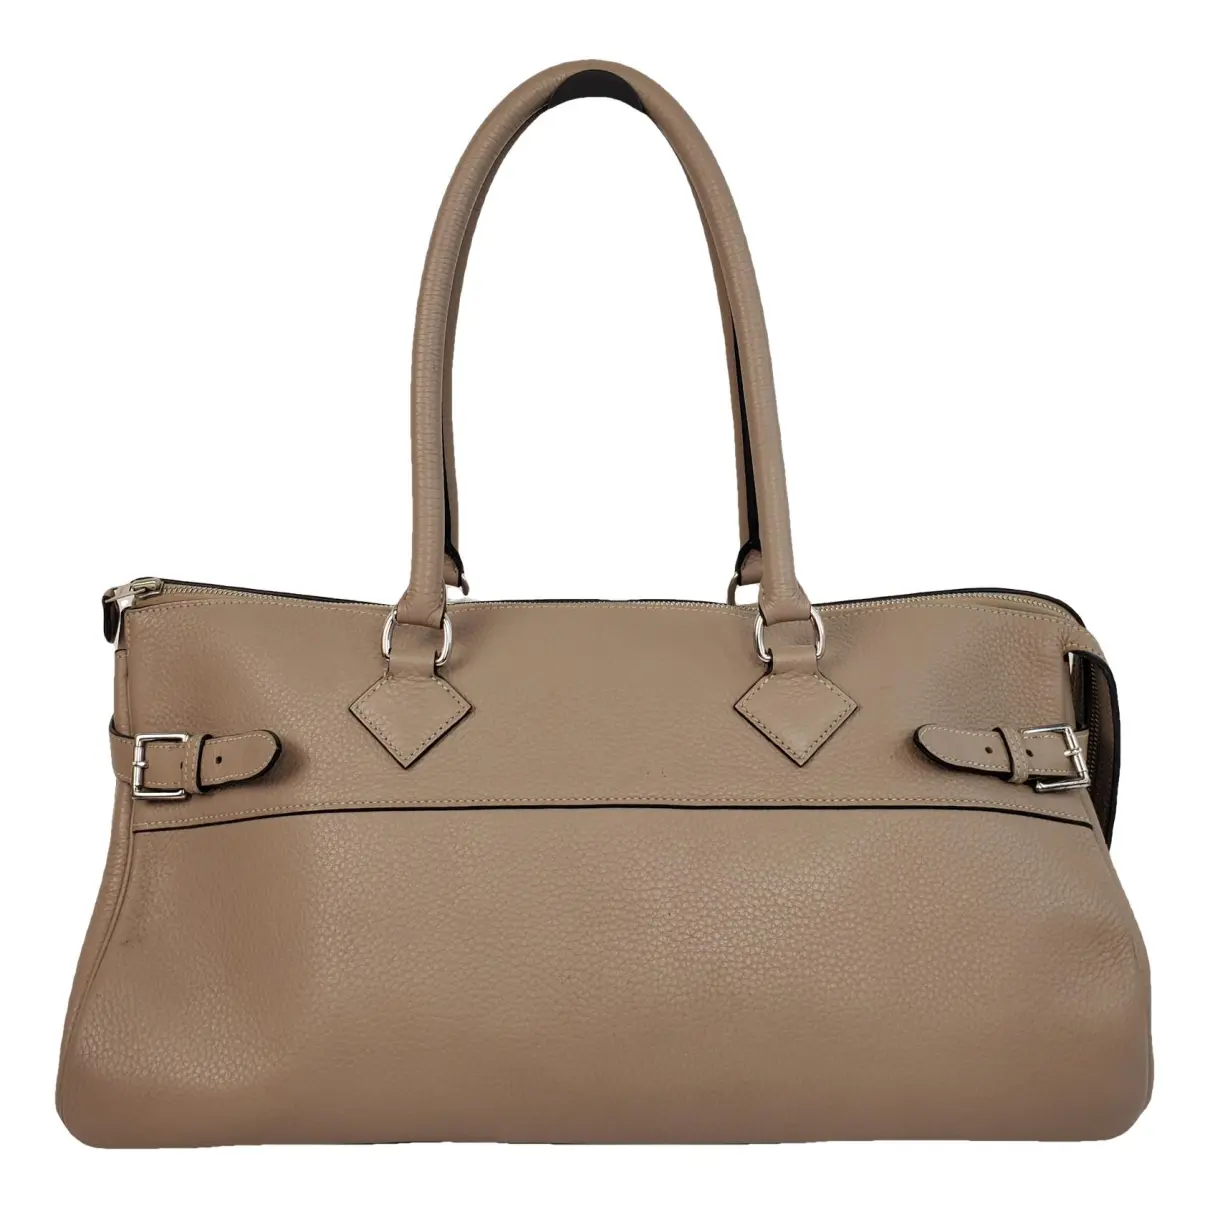 Victoria leather handbag